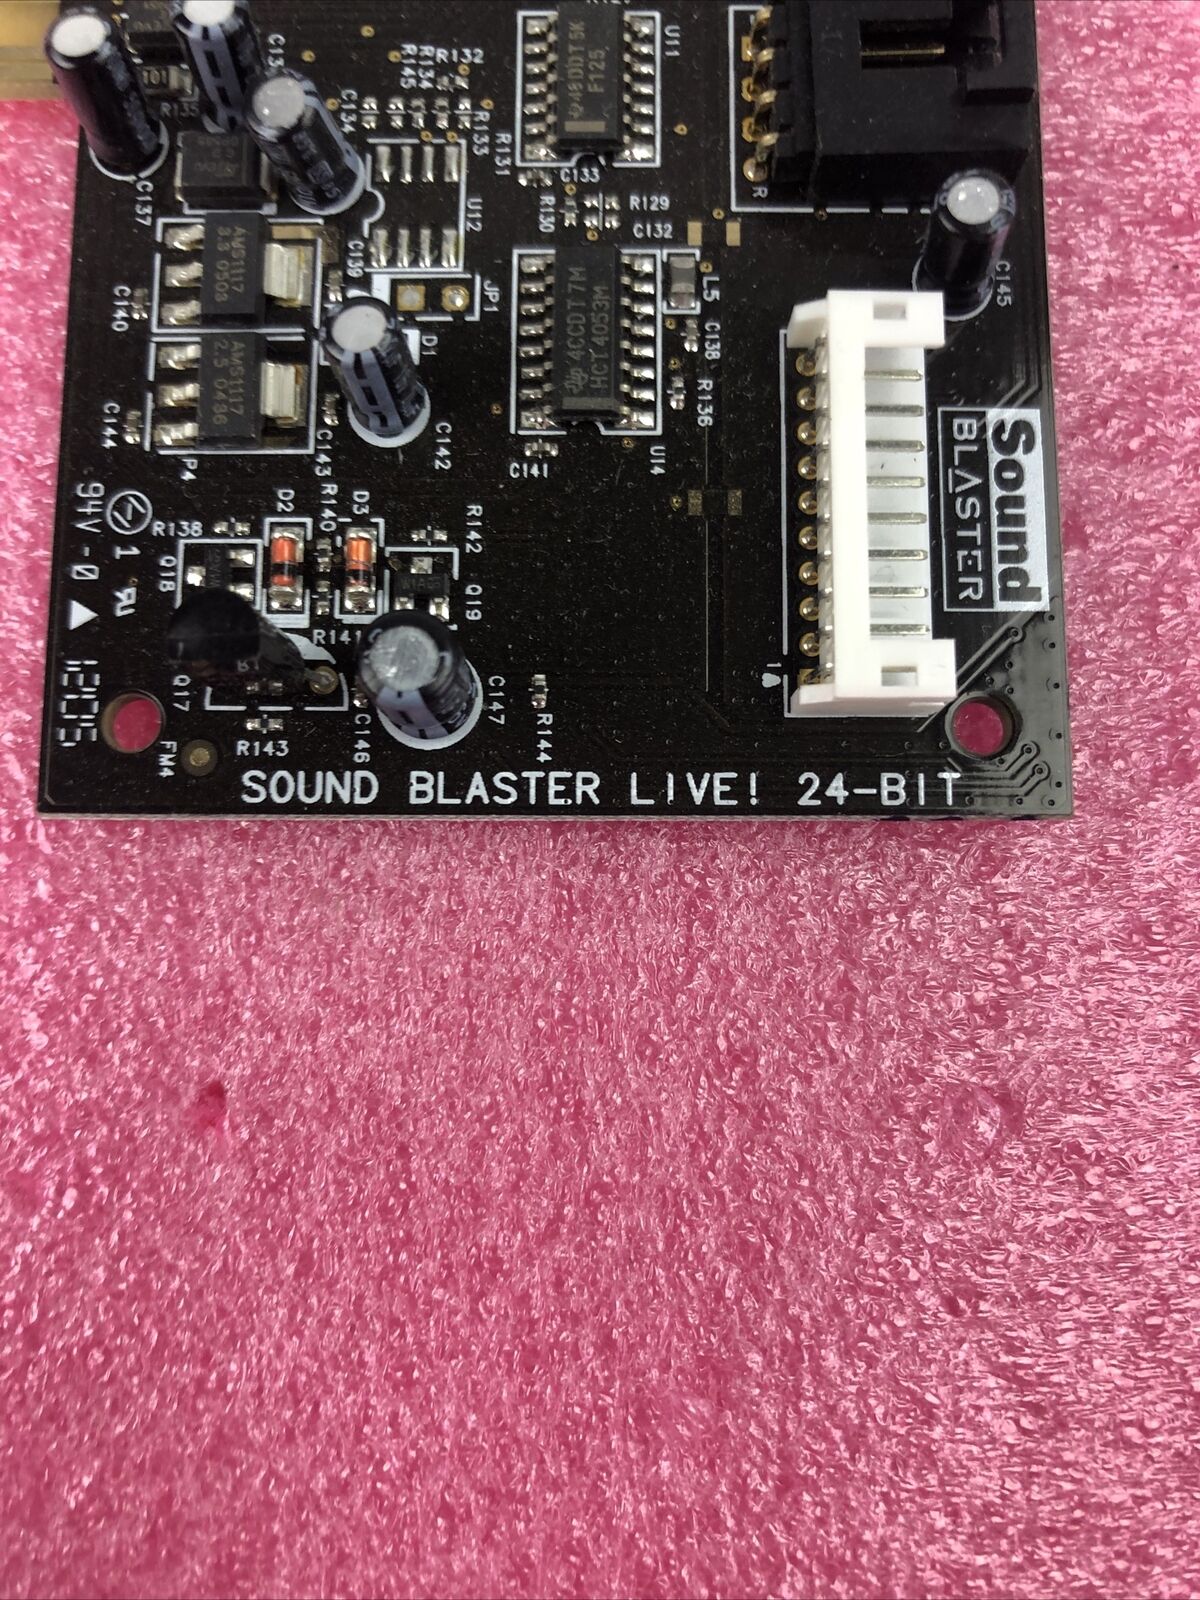 Creative Labs SB0410 Sound Blaster PCI Sound Card